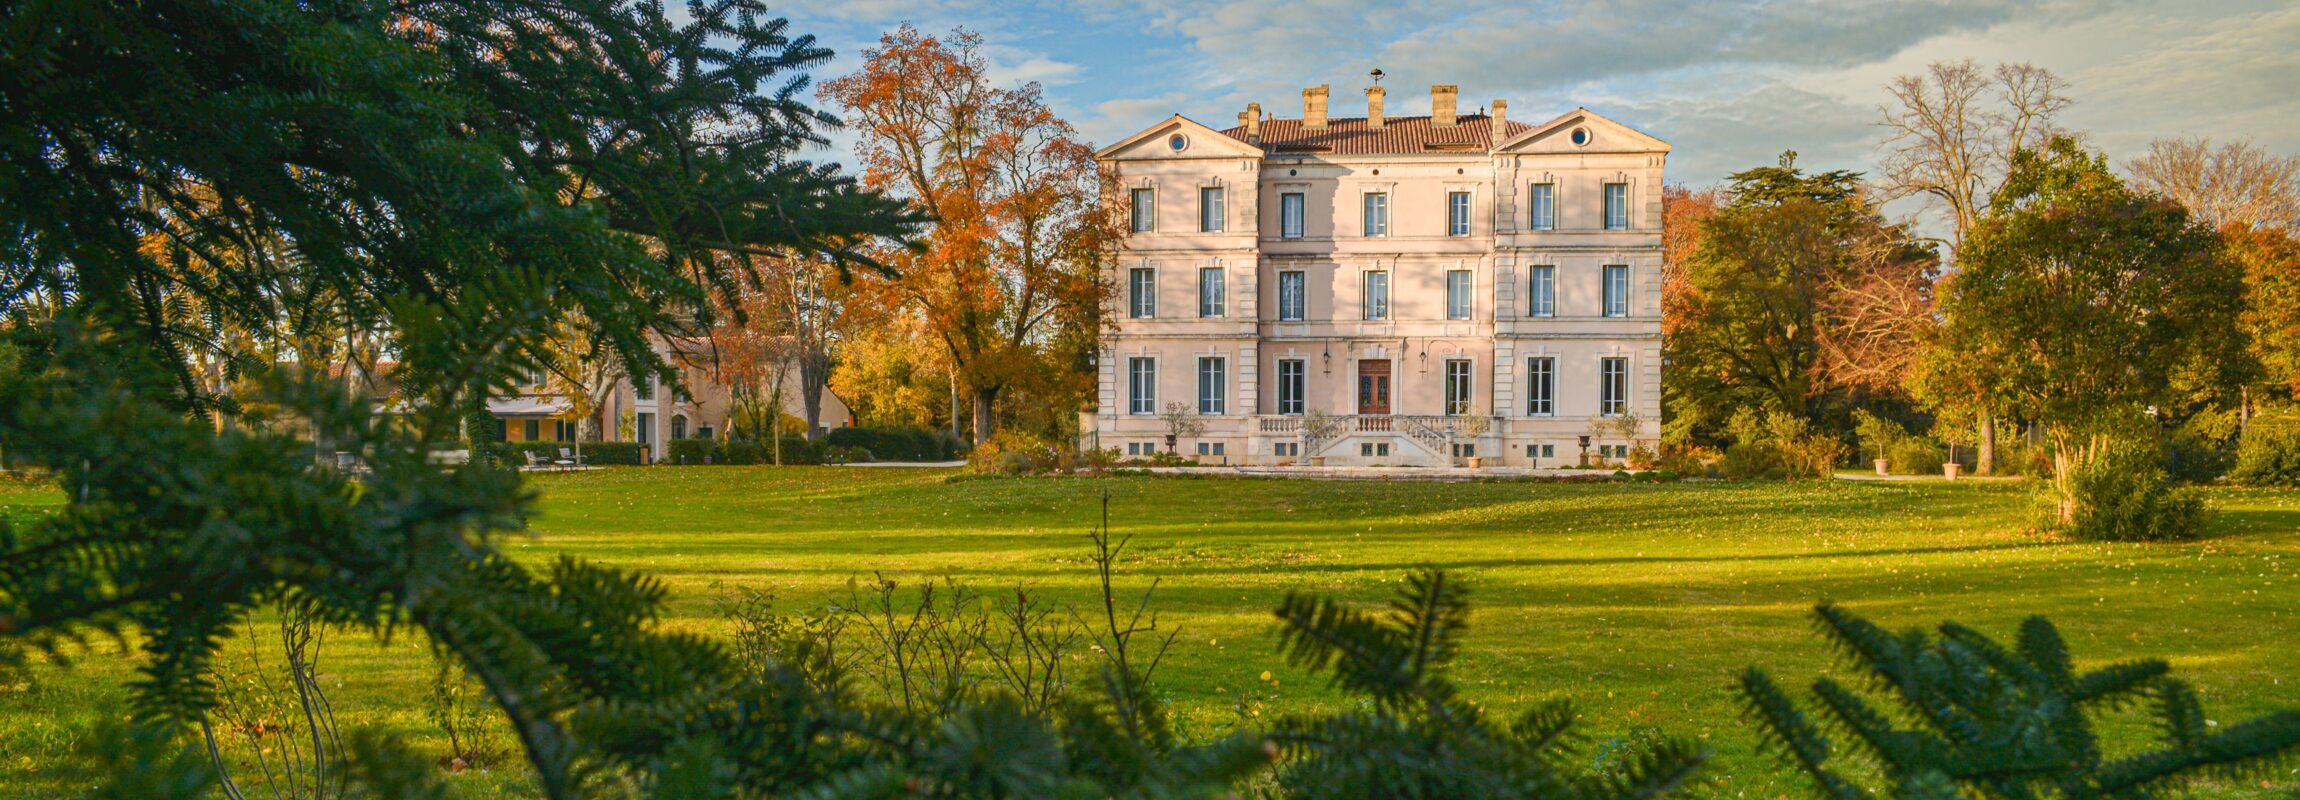 Château de Montcaud, Hotel Provence Südfrankreich